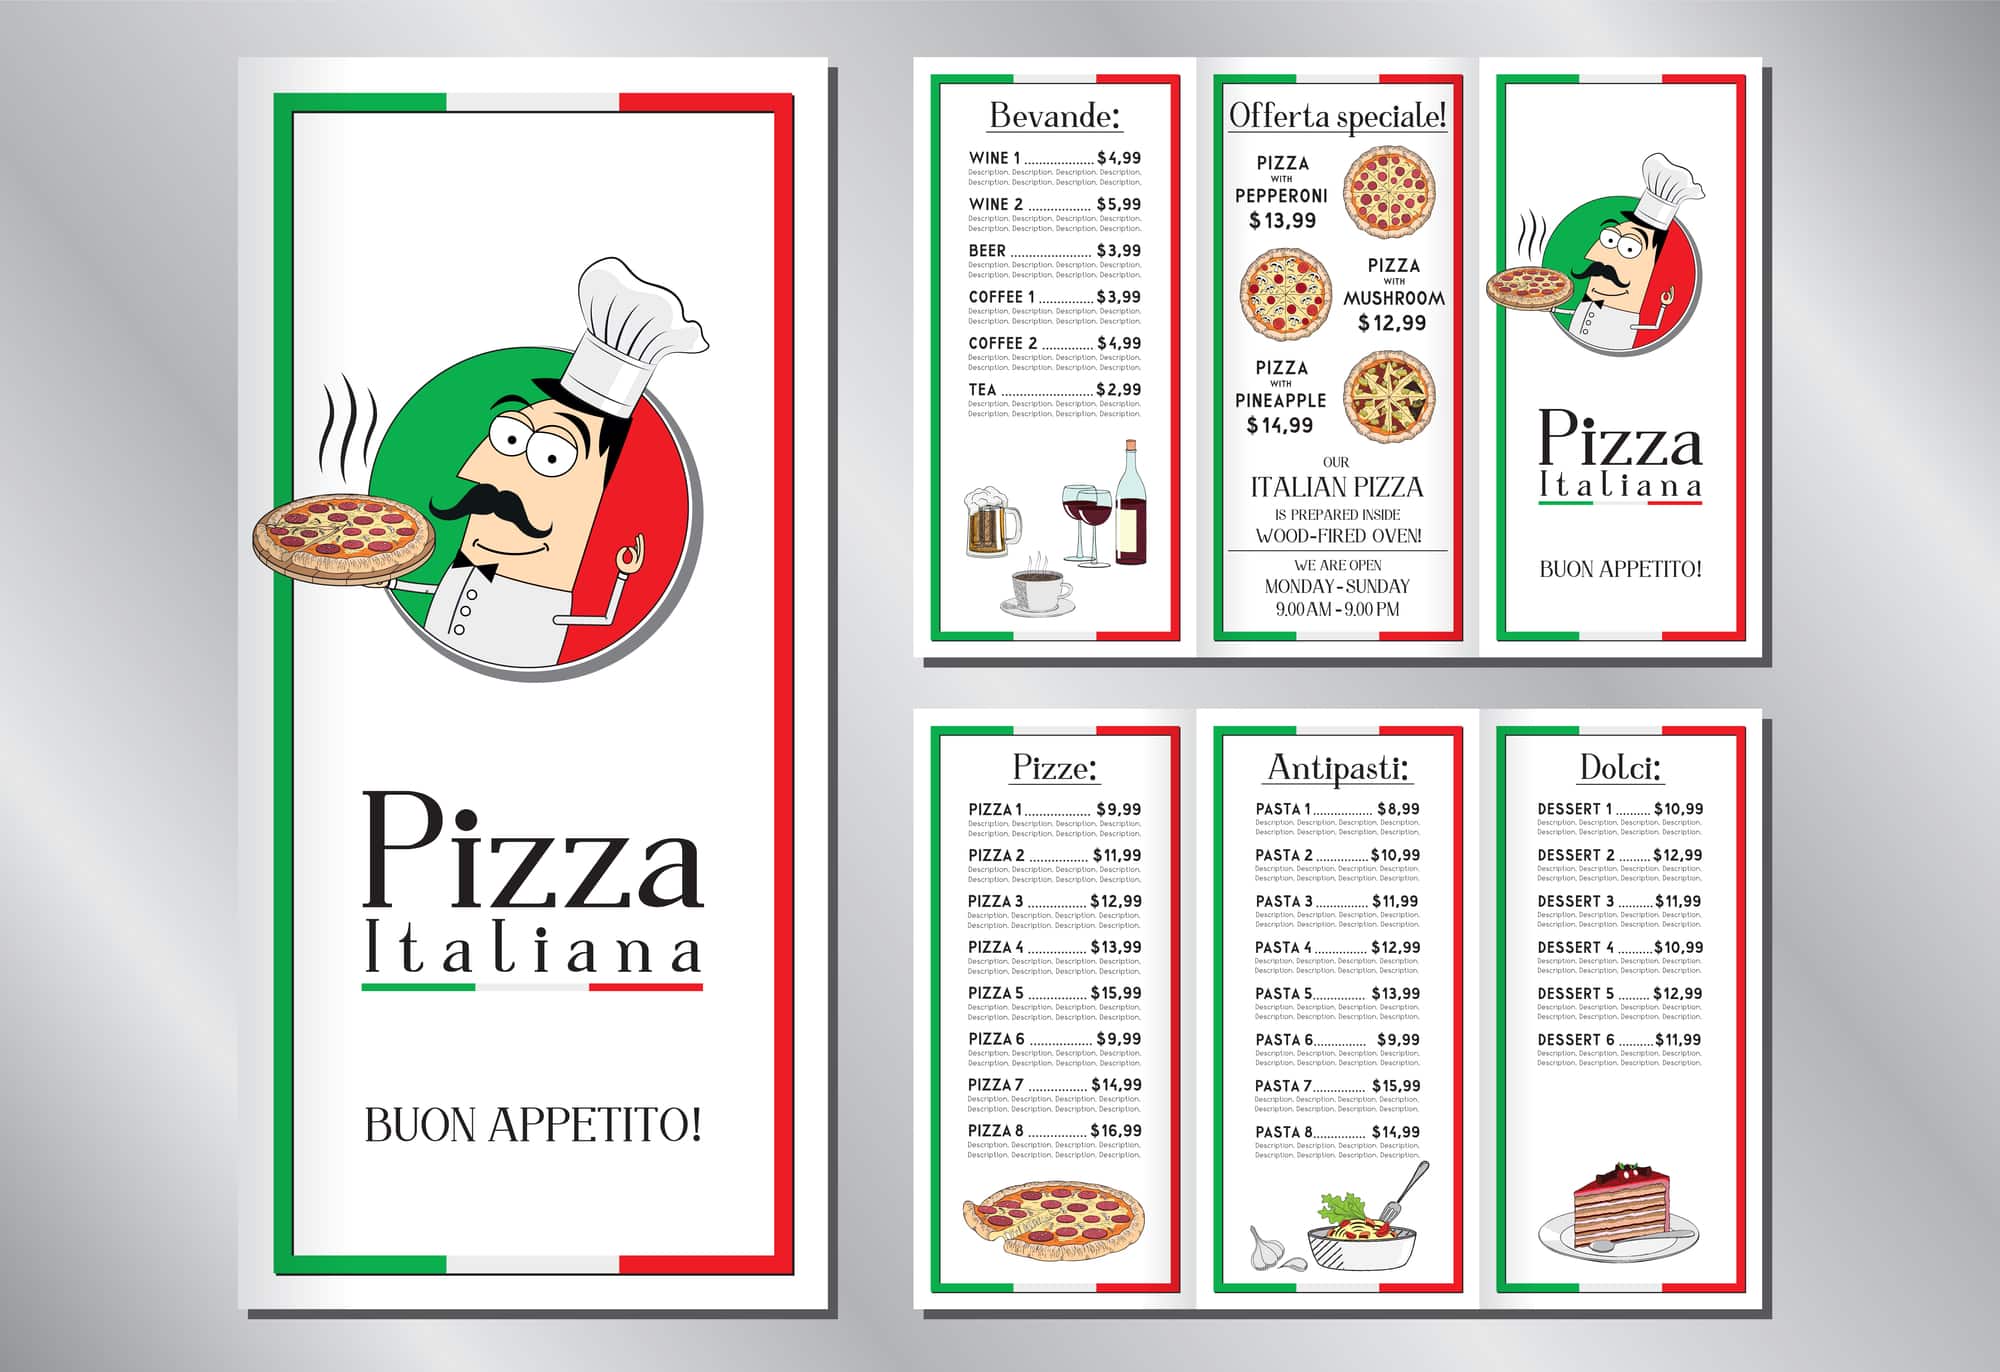 Italian pizza restaurant - menu/ flyer template - pizzas, pastas, desserts, drinks - 3 x DL (99x210 mm)